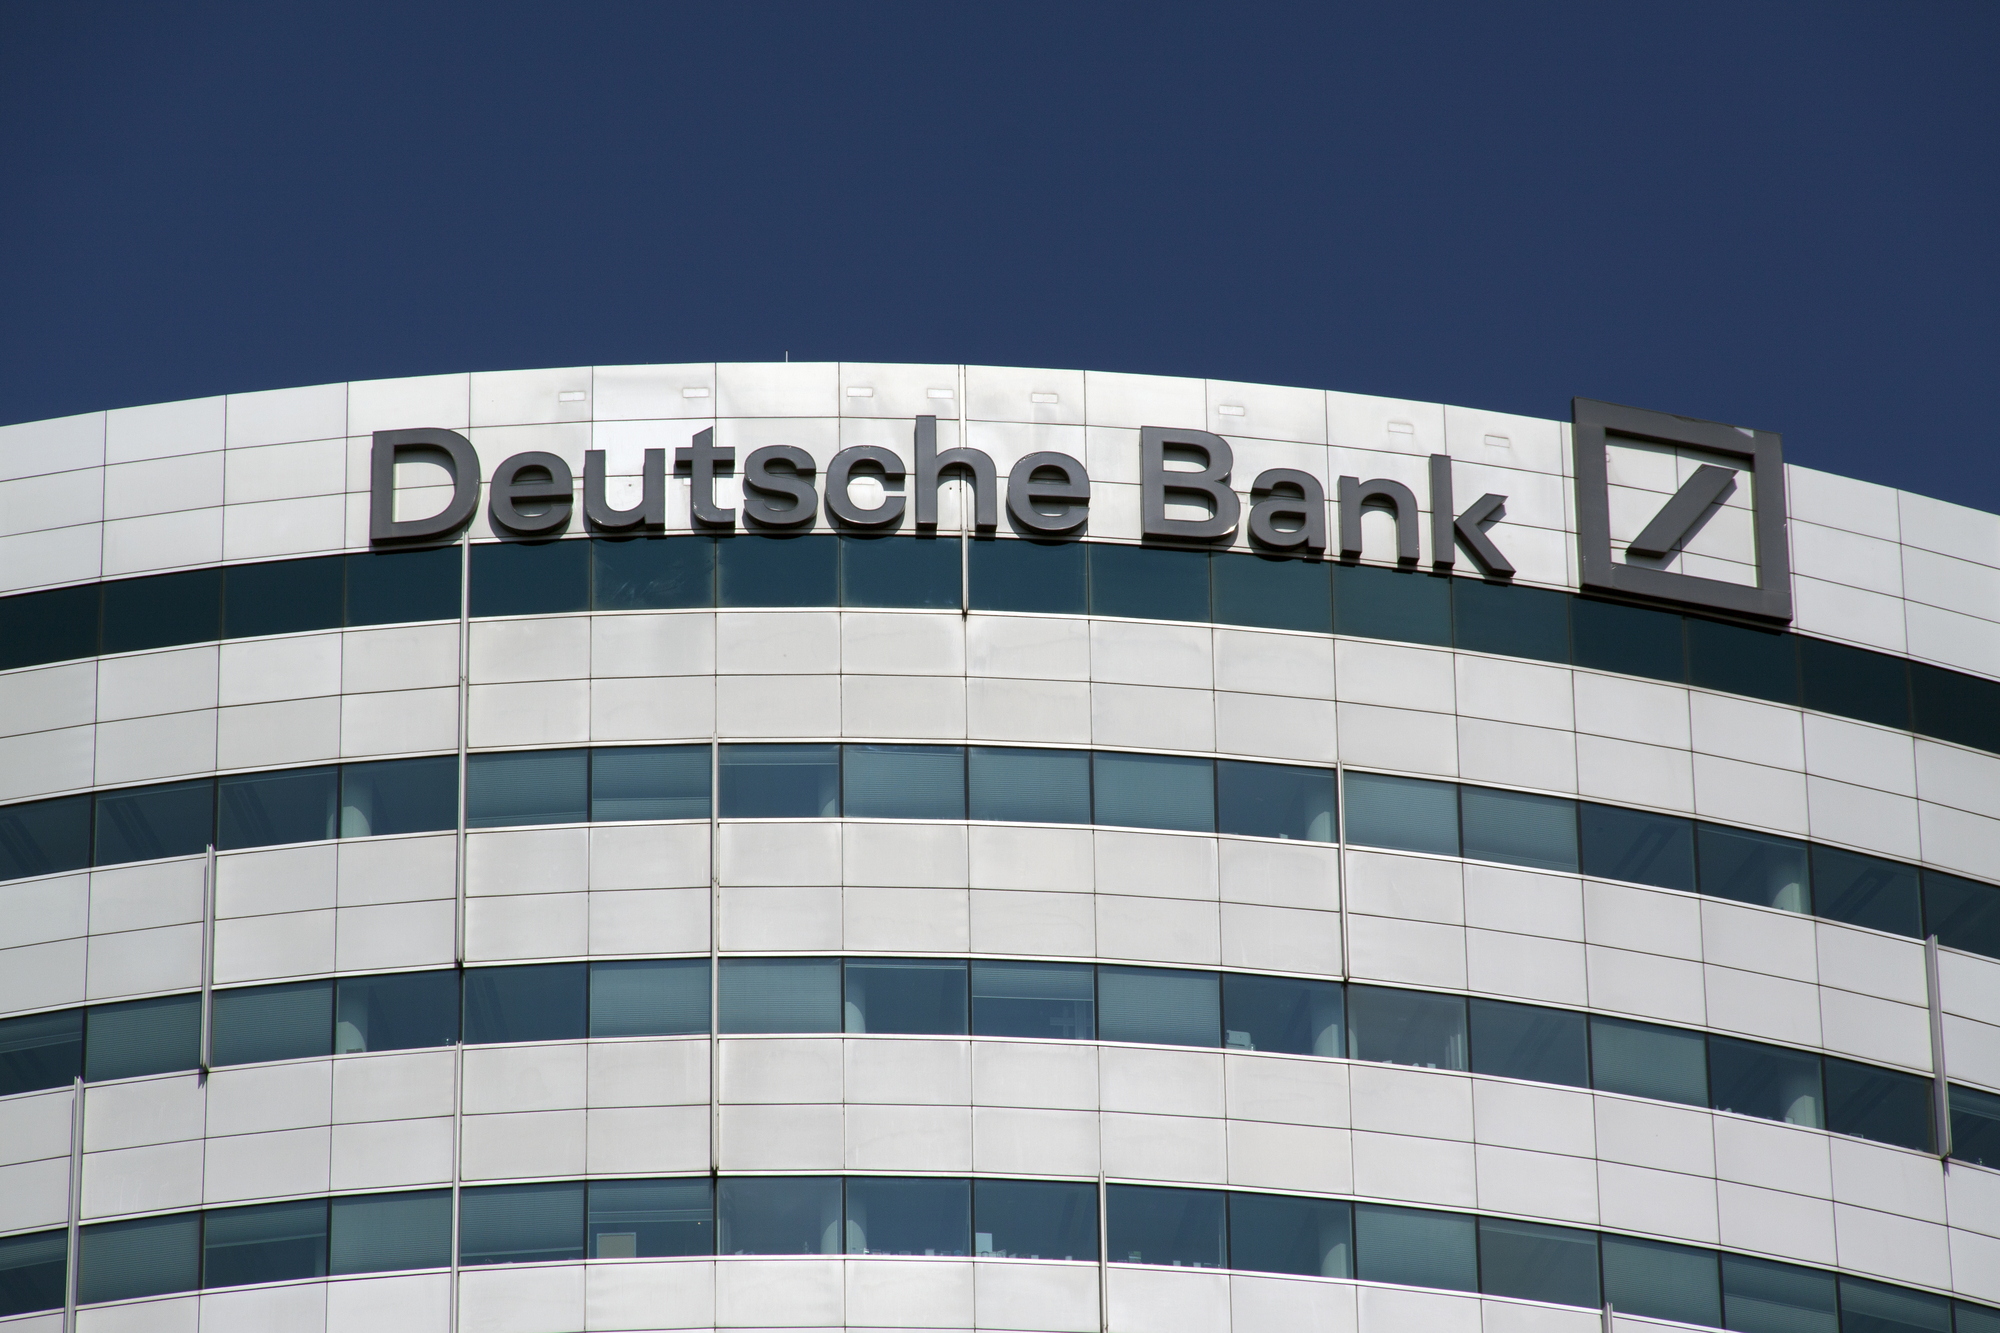 office of the Deutsche bank in Amsterdam